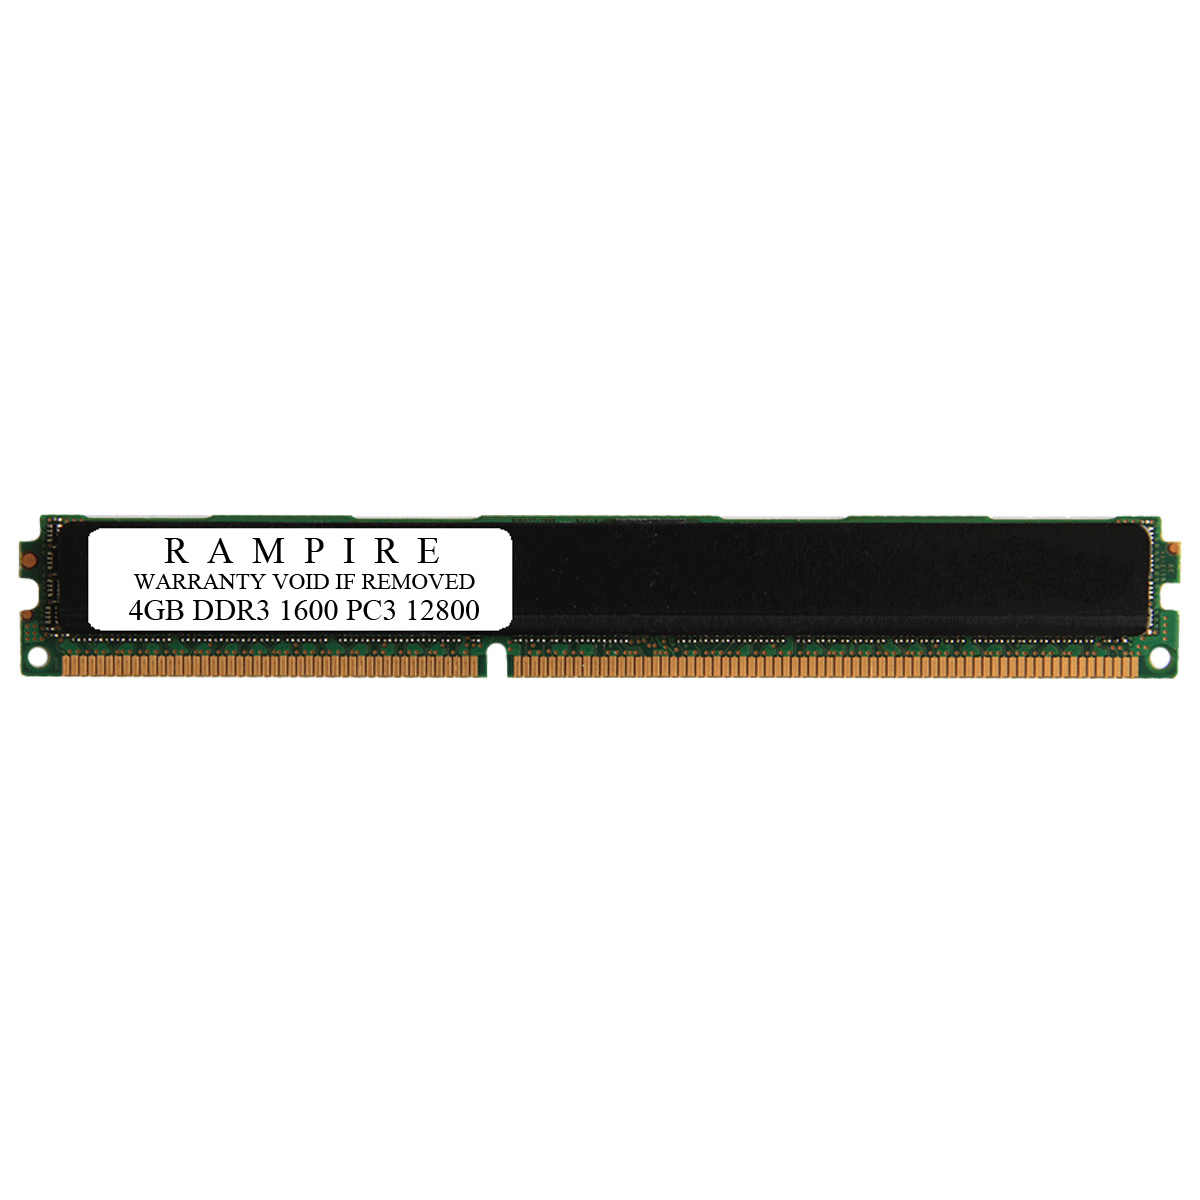 RAMPIRE 4GB DDR3 1600 (PC3 12800) 240-Pin SDRAM 1Rx4 VLP (Low Profile) 1.35V ECC Registered Server Memory